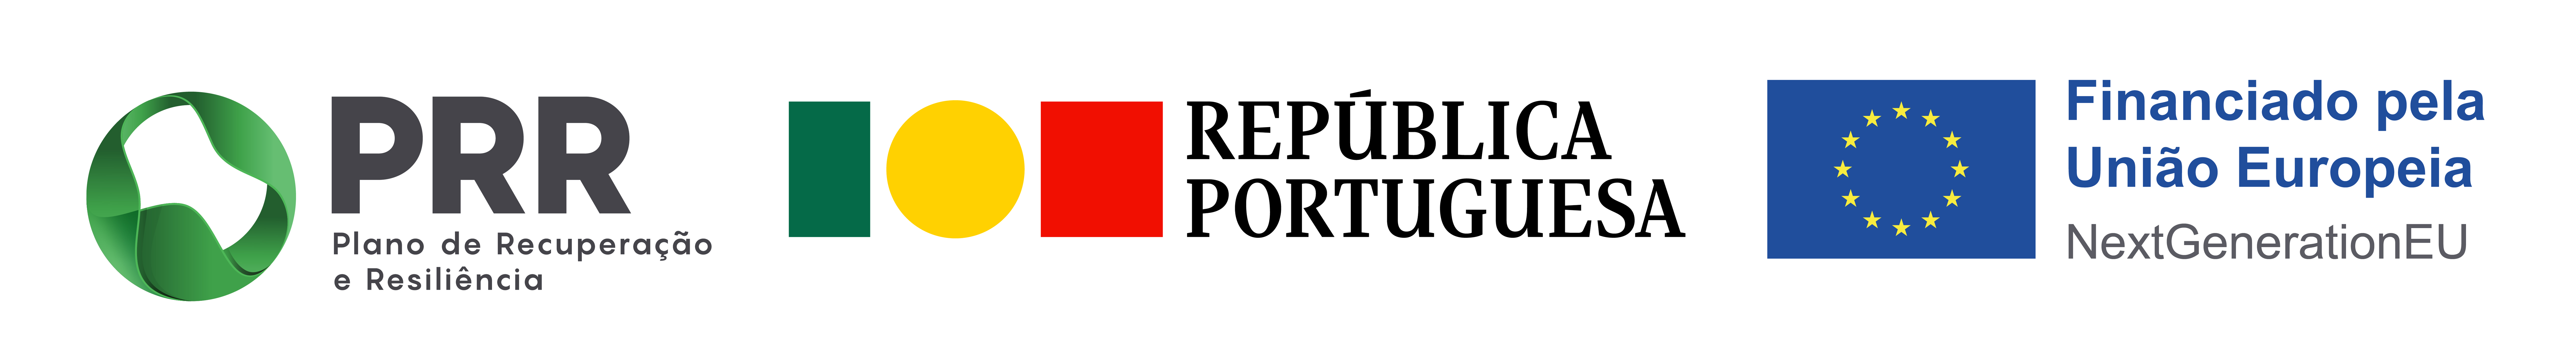 _Barra: PRR-República Portuguesa-Financiado pela UE